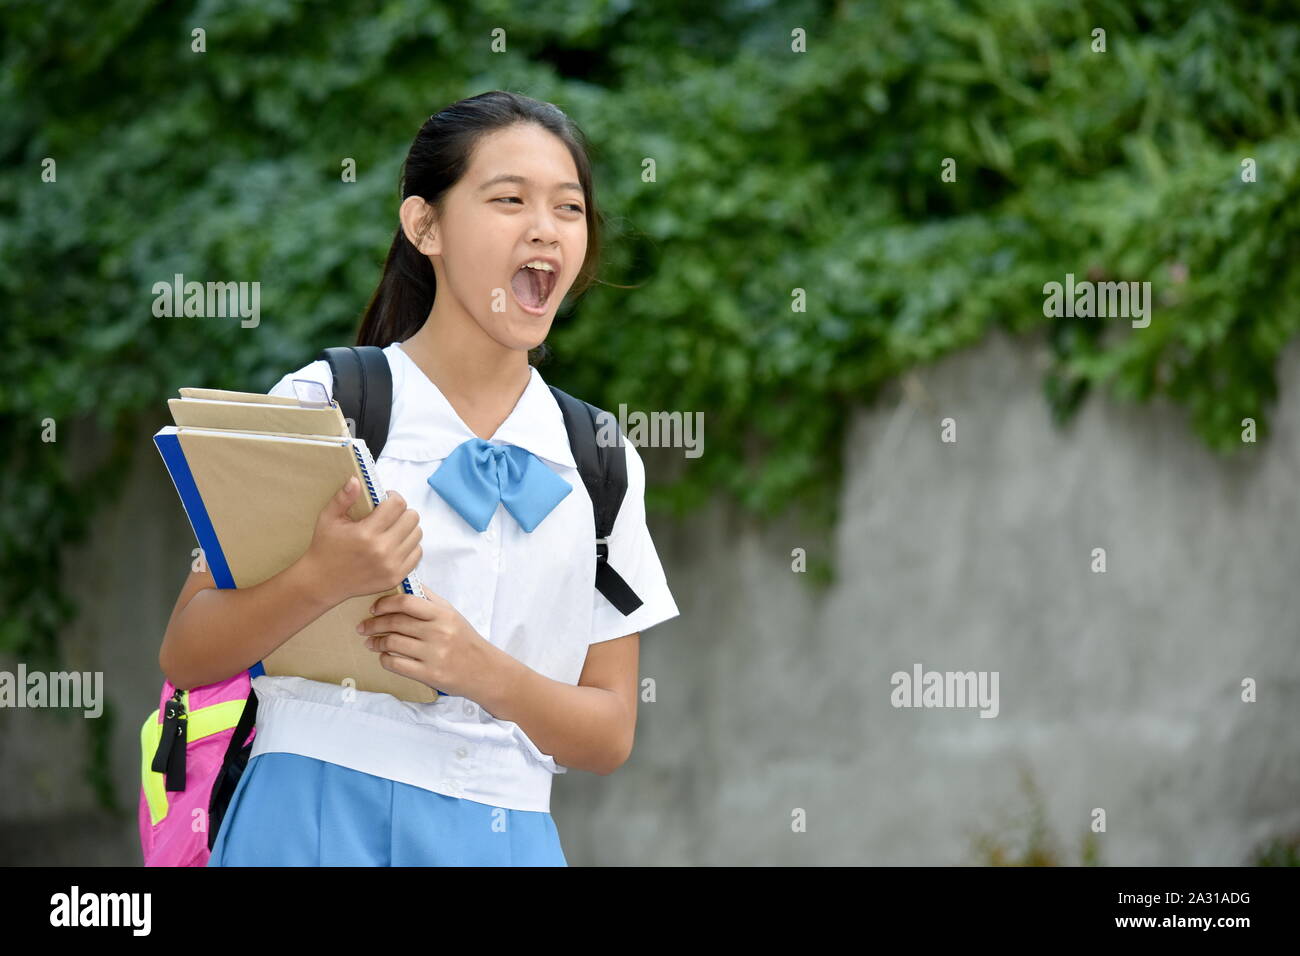 Youthful Filipina Girl Student Yelling With School Books Stock Photo